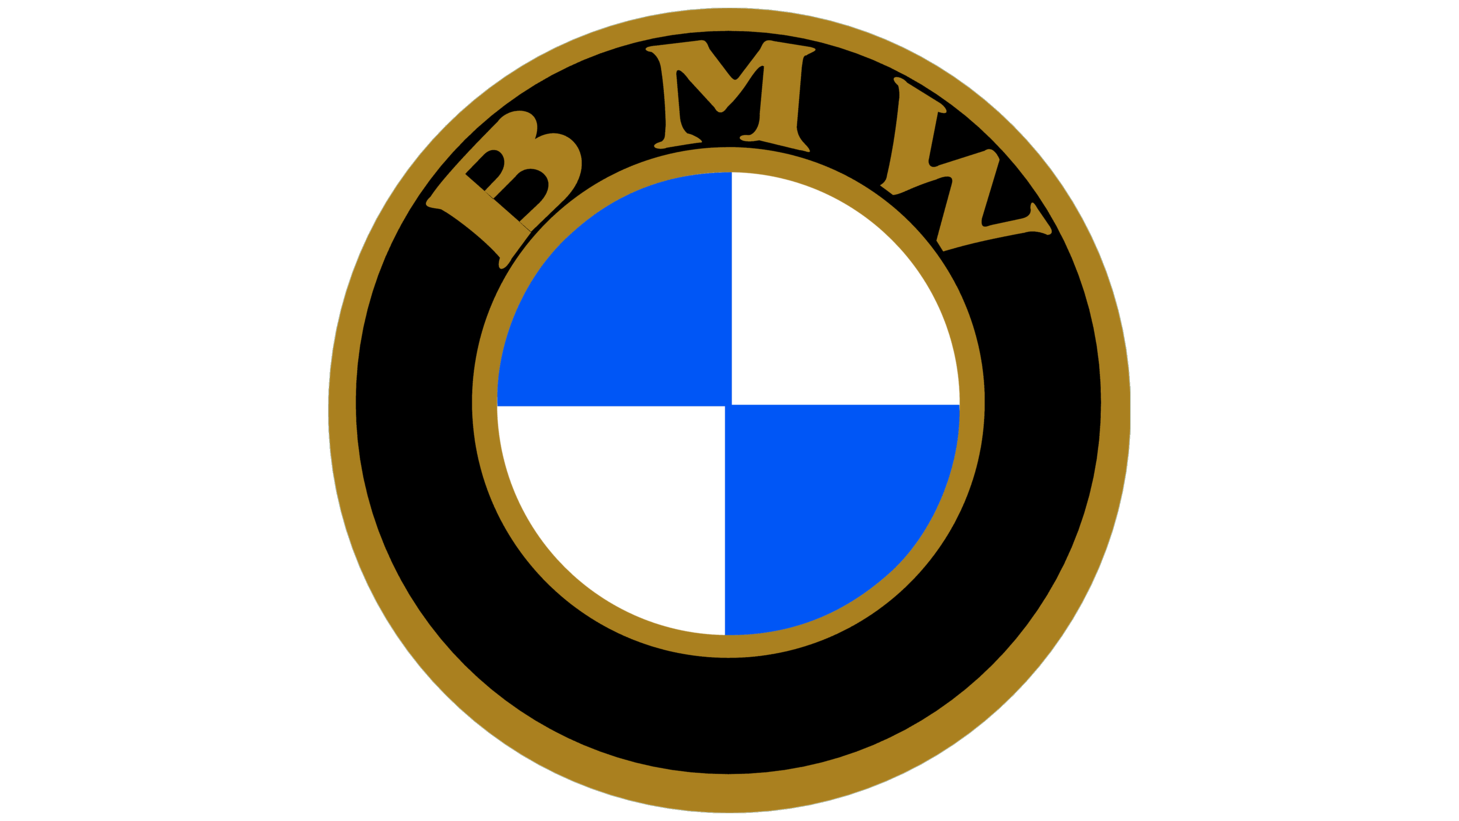 Bmw sign 1923 1953